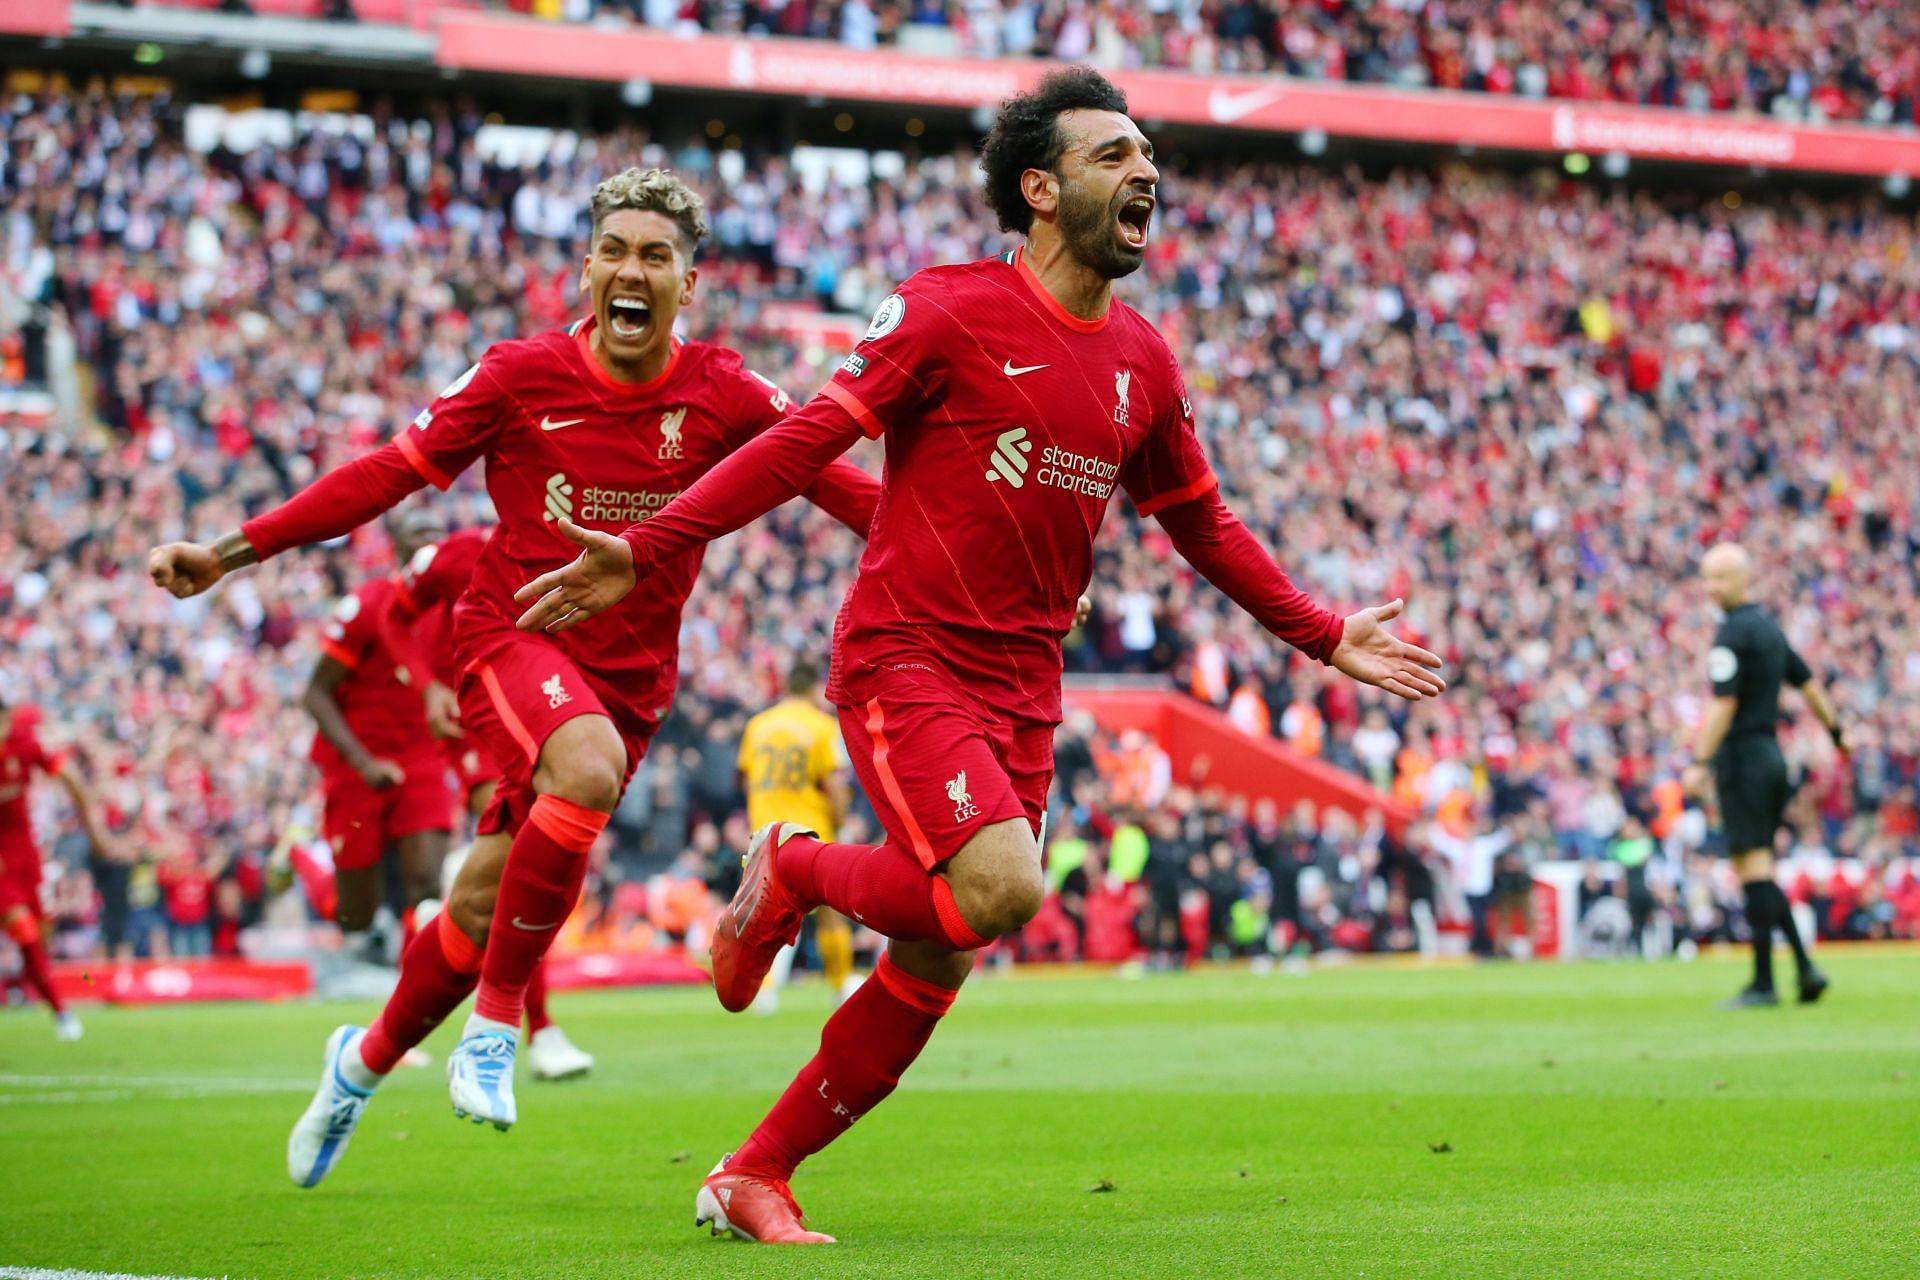 Liverpool forward Mohamed Salah will be key against Real Madrid